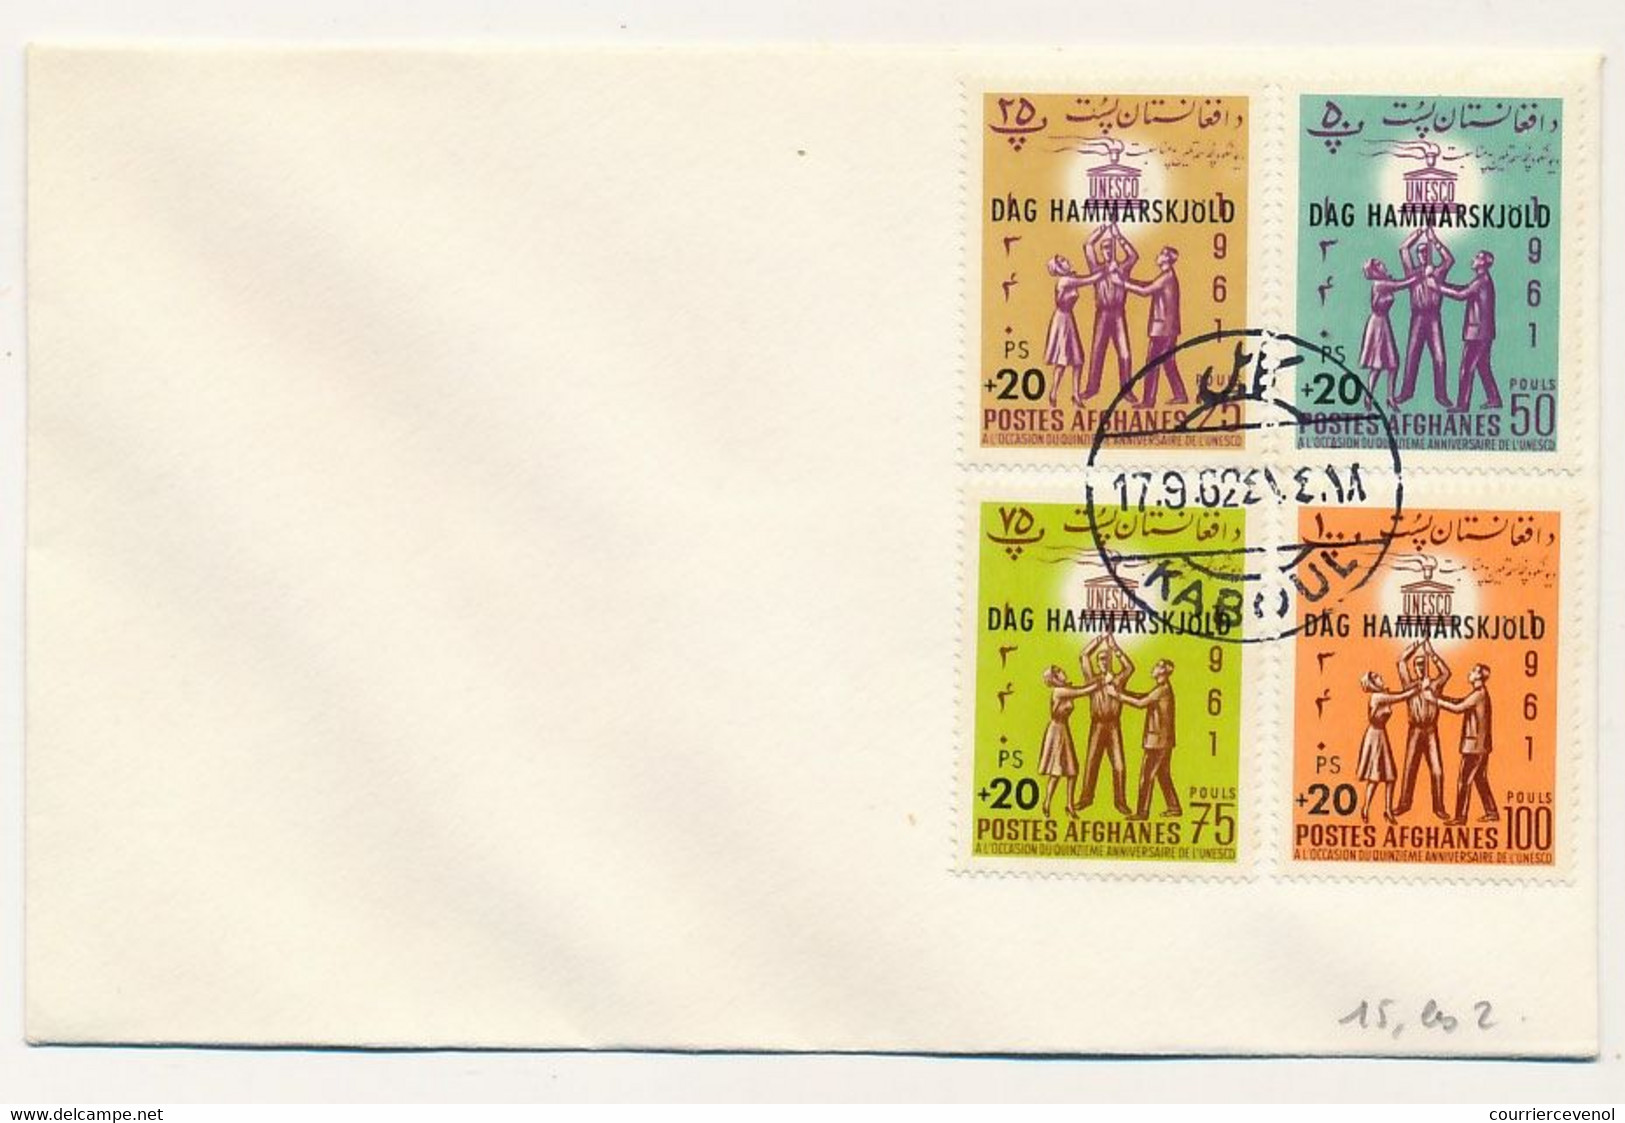 AFGHANISTAN - 2 Enveloppes Non Adressées - 9 Valeurs UNECO Surch. Dag Hammarskjold - KABOUL - 17/9/1962 - Afghanistan